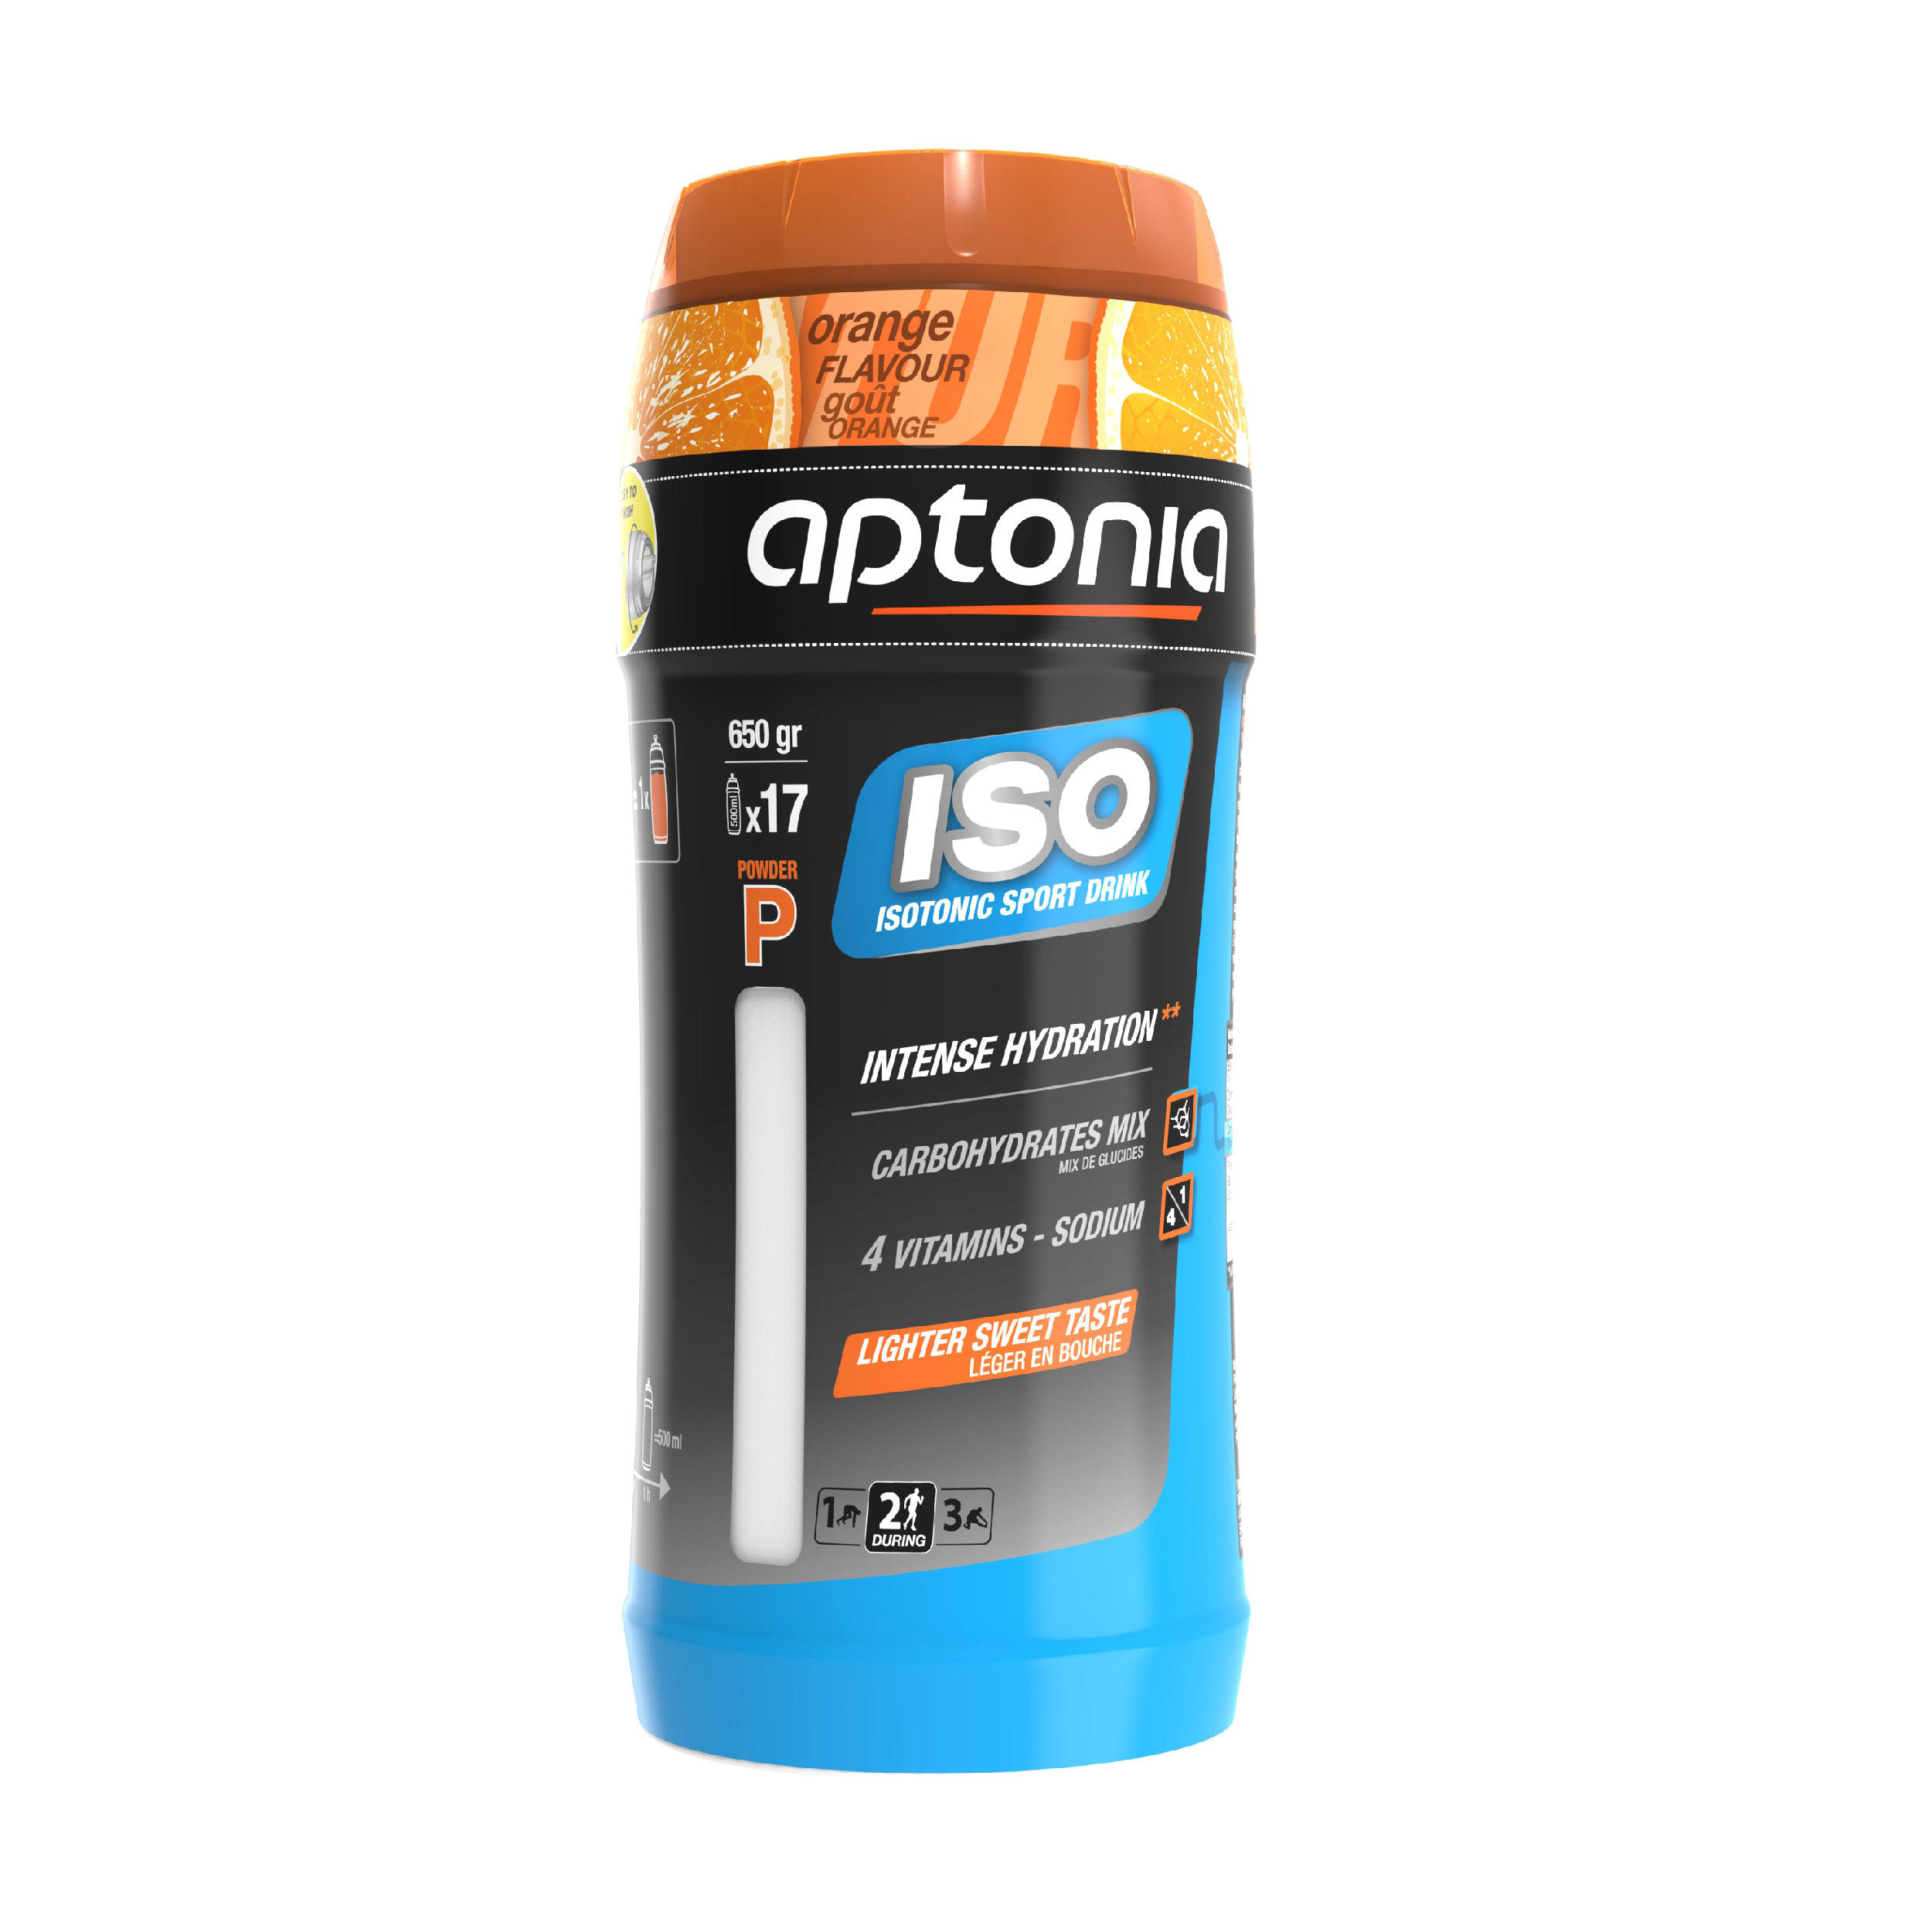 APTONIA ISO Isotonic Drink Powder 650g - orange